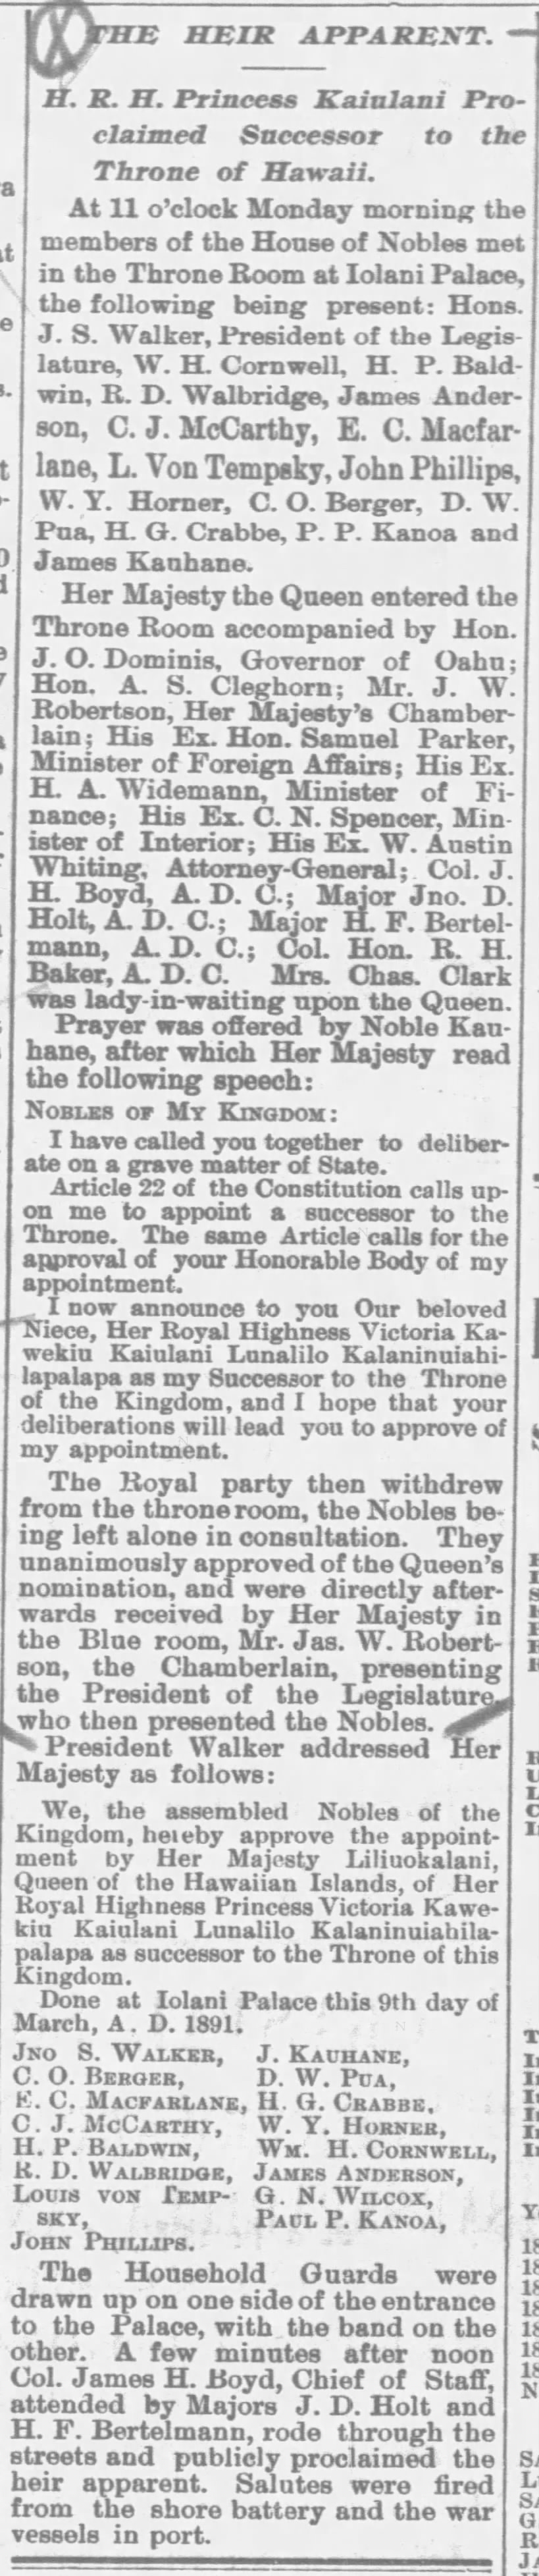 H.R.H. Princess Kaiulani Proclaimed Successor to the Throne of Hawaii